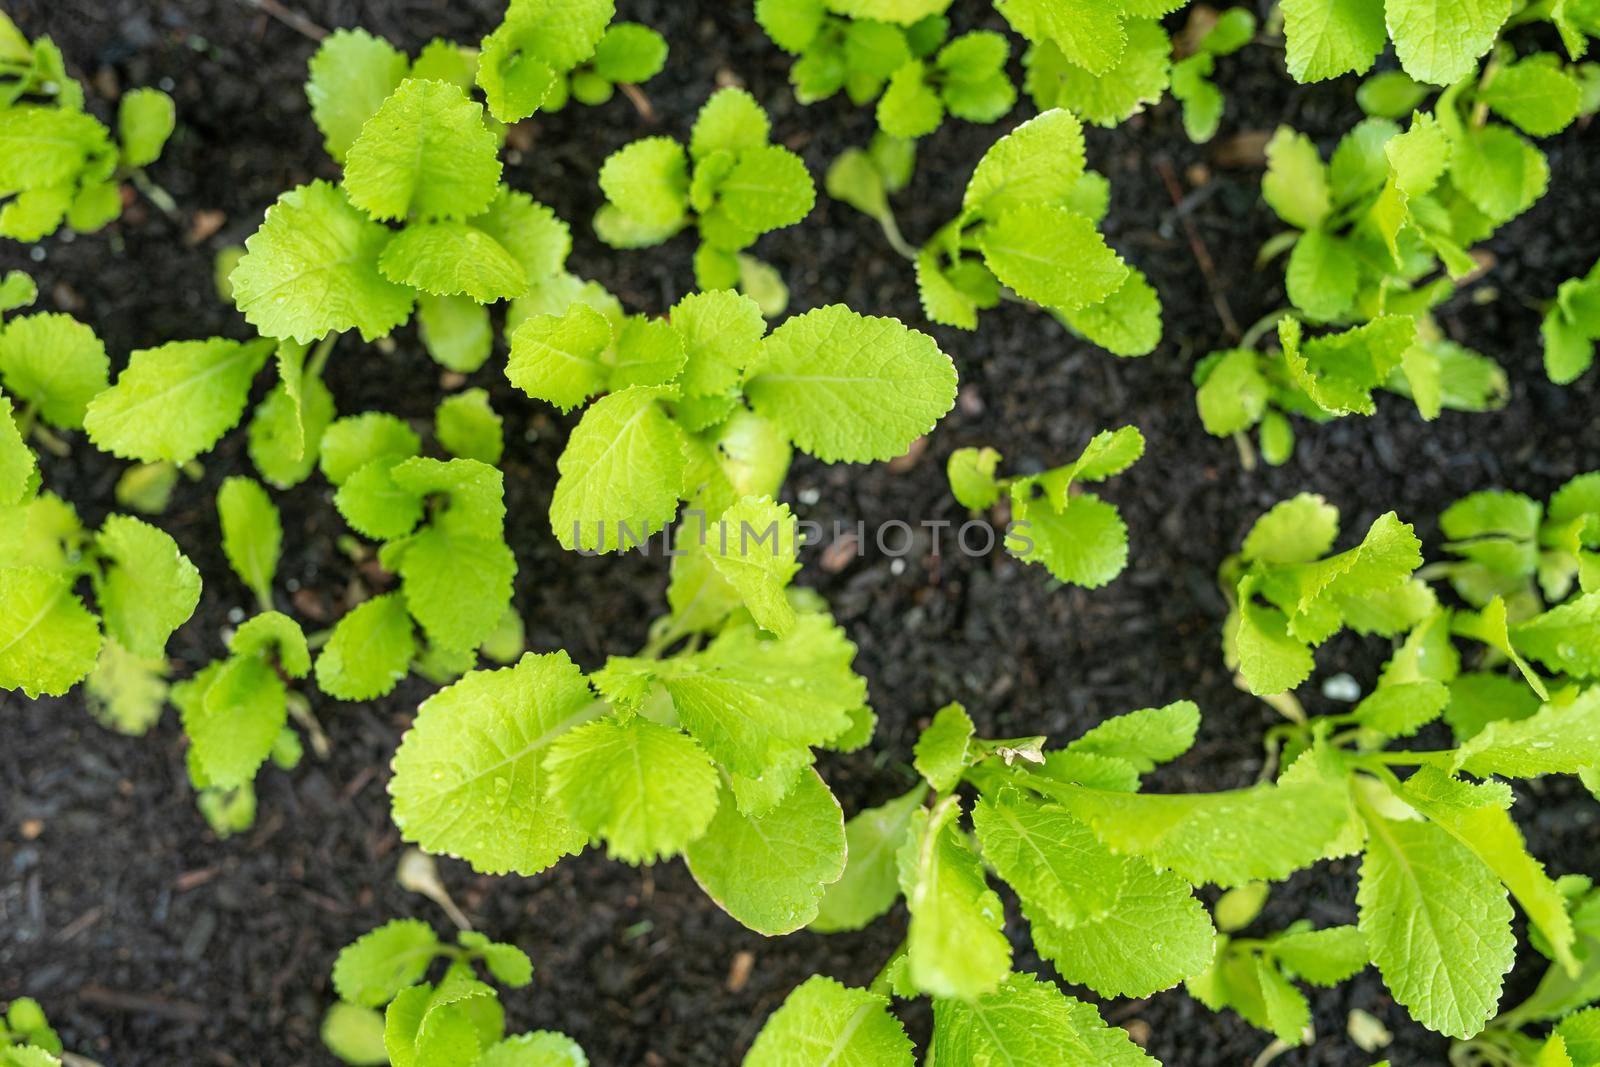 Seedling of oregano plants, fresh organic herbs growing up, origanum vulgare